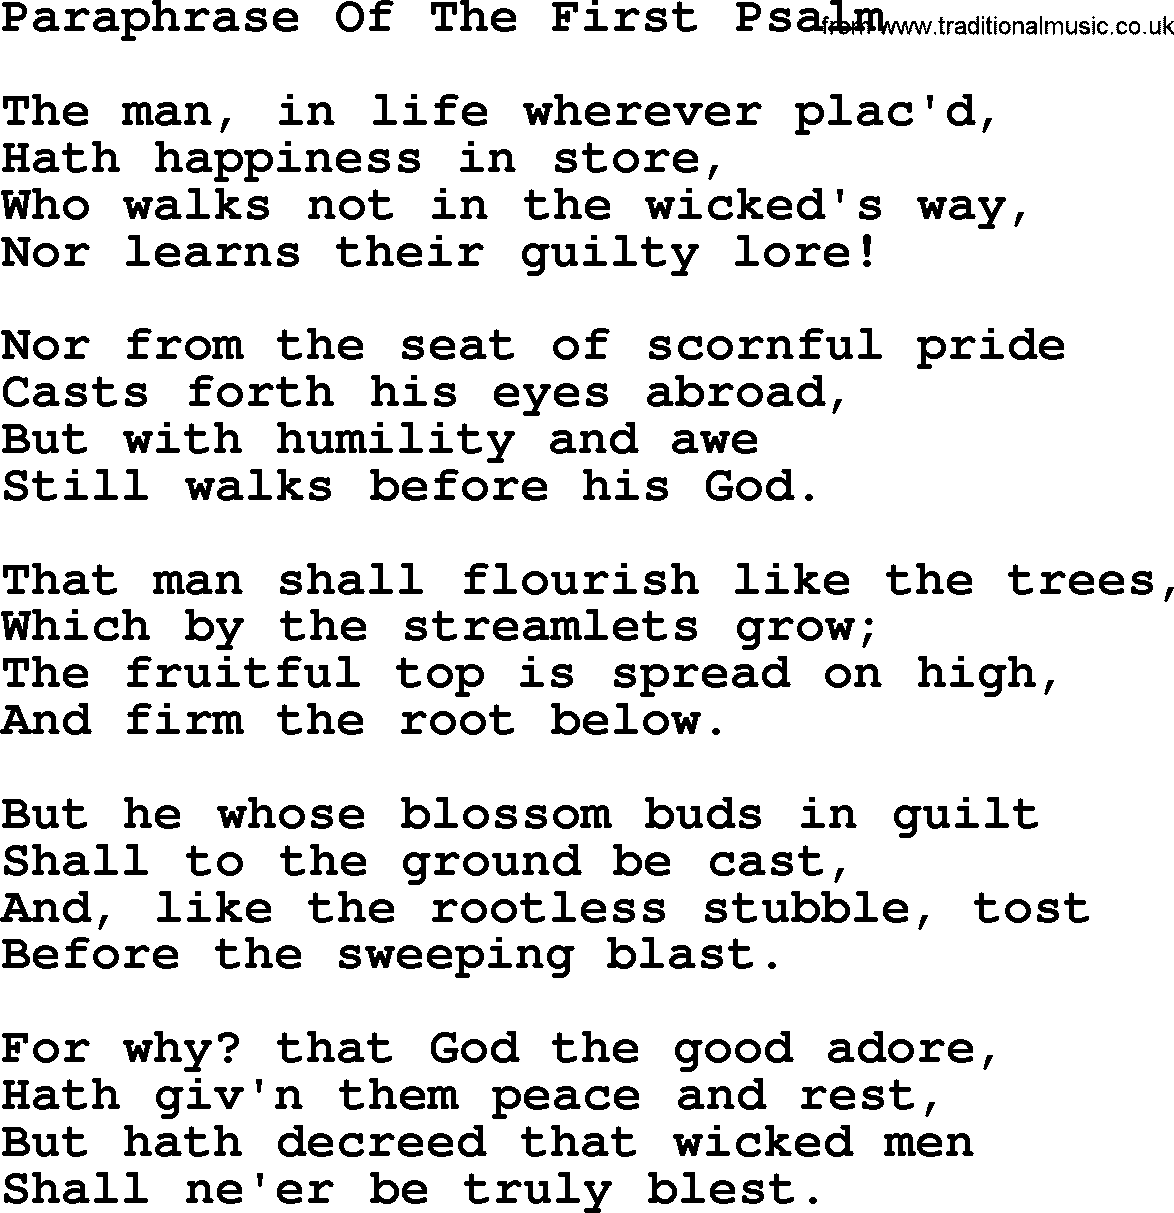 Robert Burns Songs & Lyrics: Paraphrase Of The First Psalm